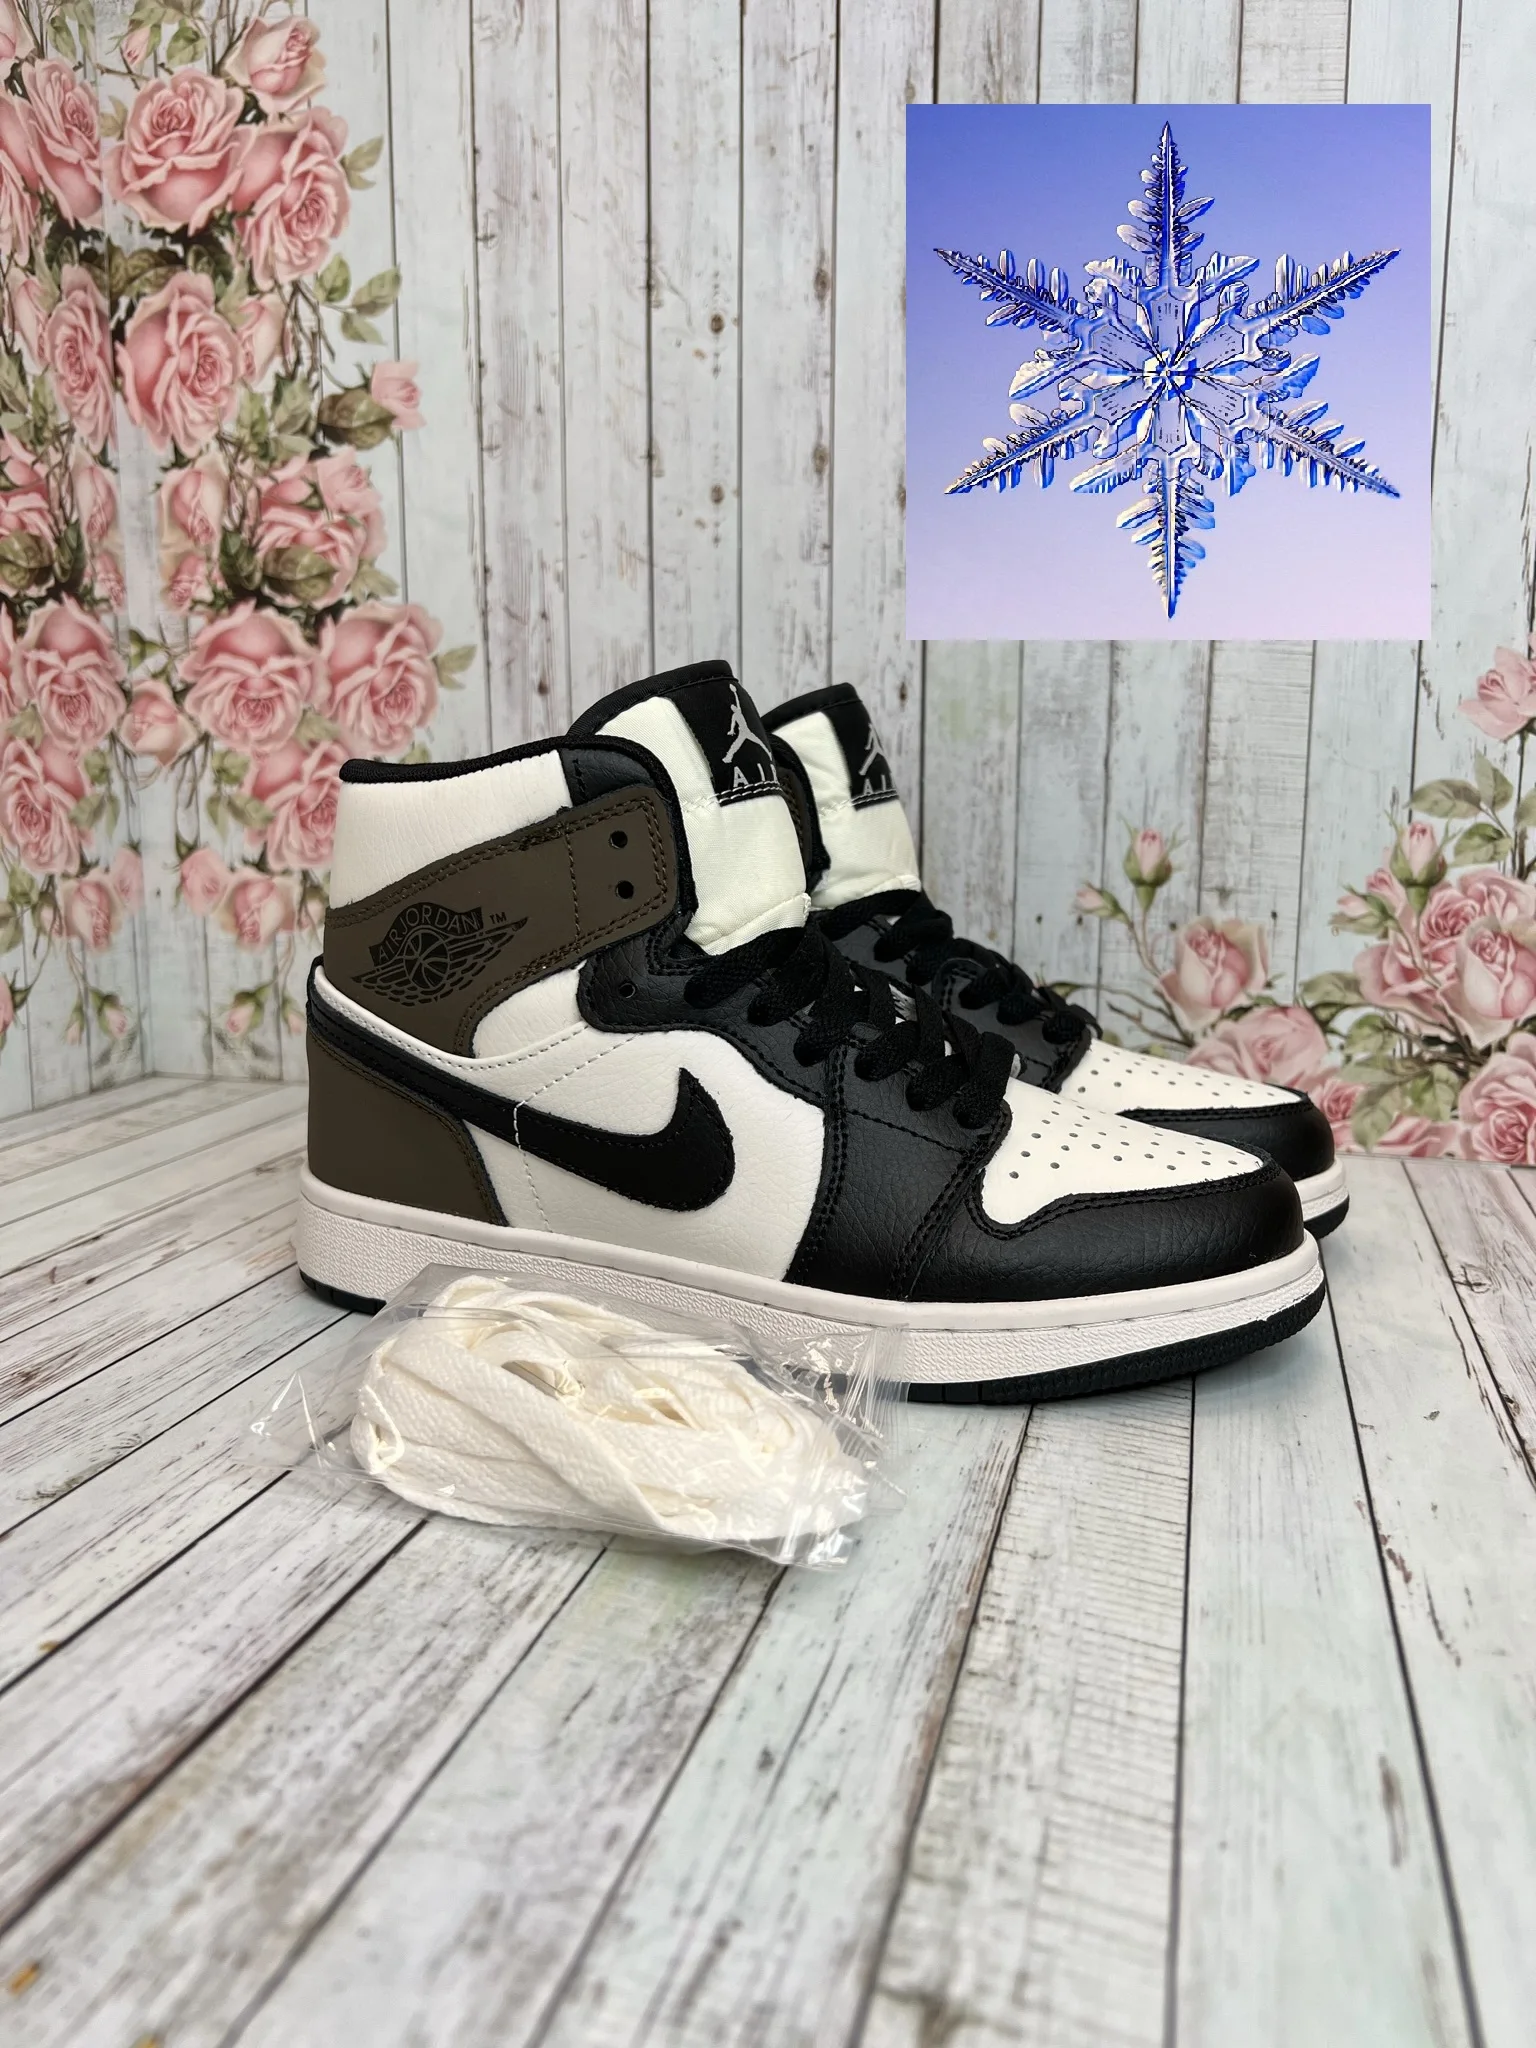 Кроссовки Nike AIR Jordan зимние | AliExpress